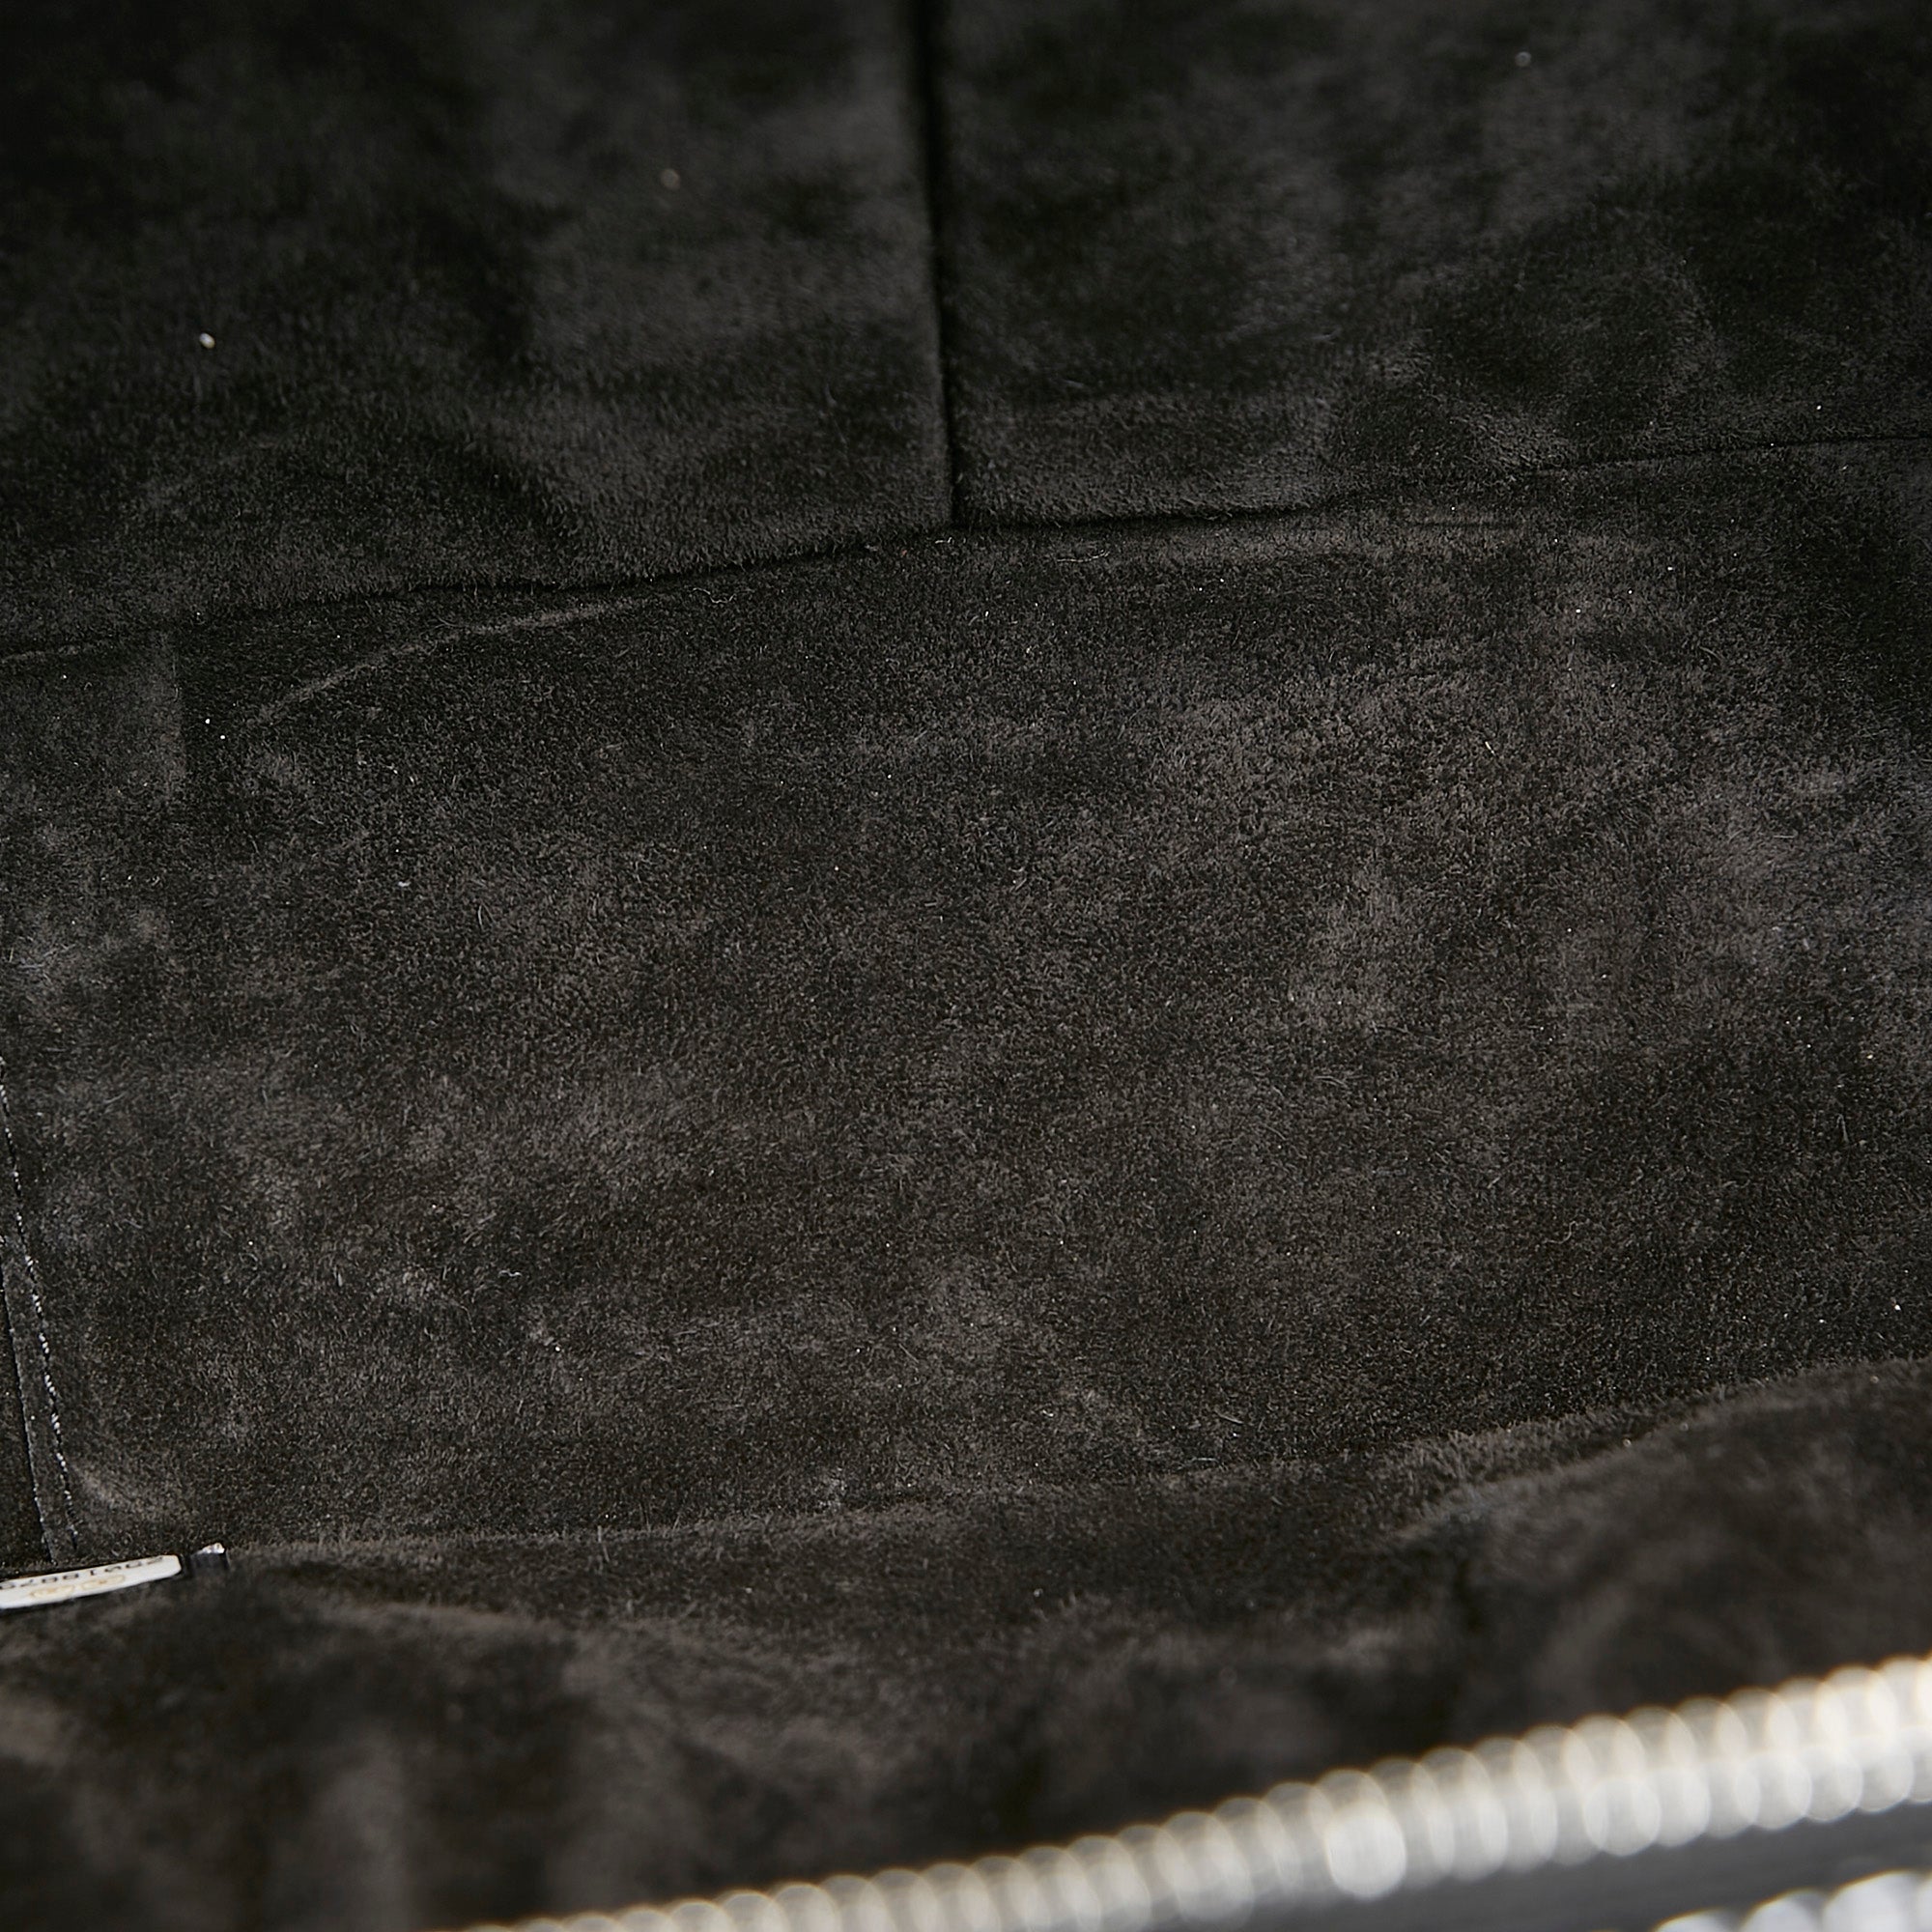 Black Chanel Vanity Case Patent Leather Satchel – Designer Revival